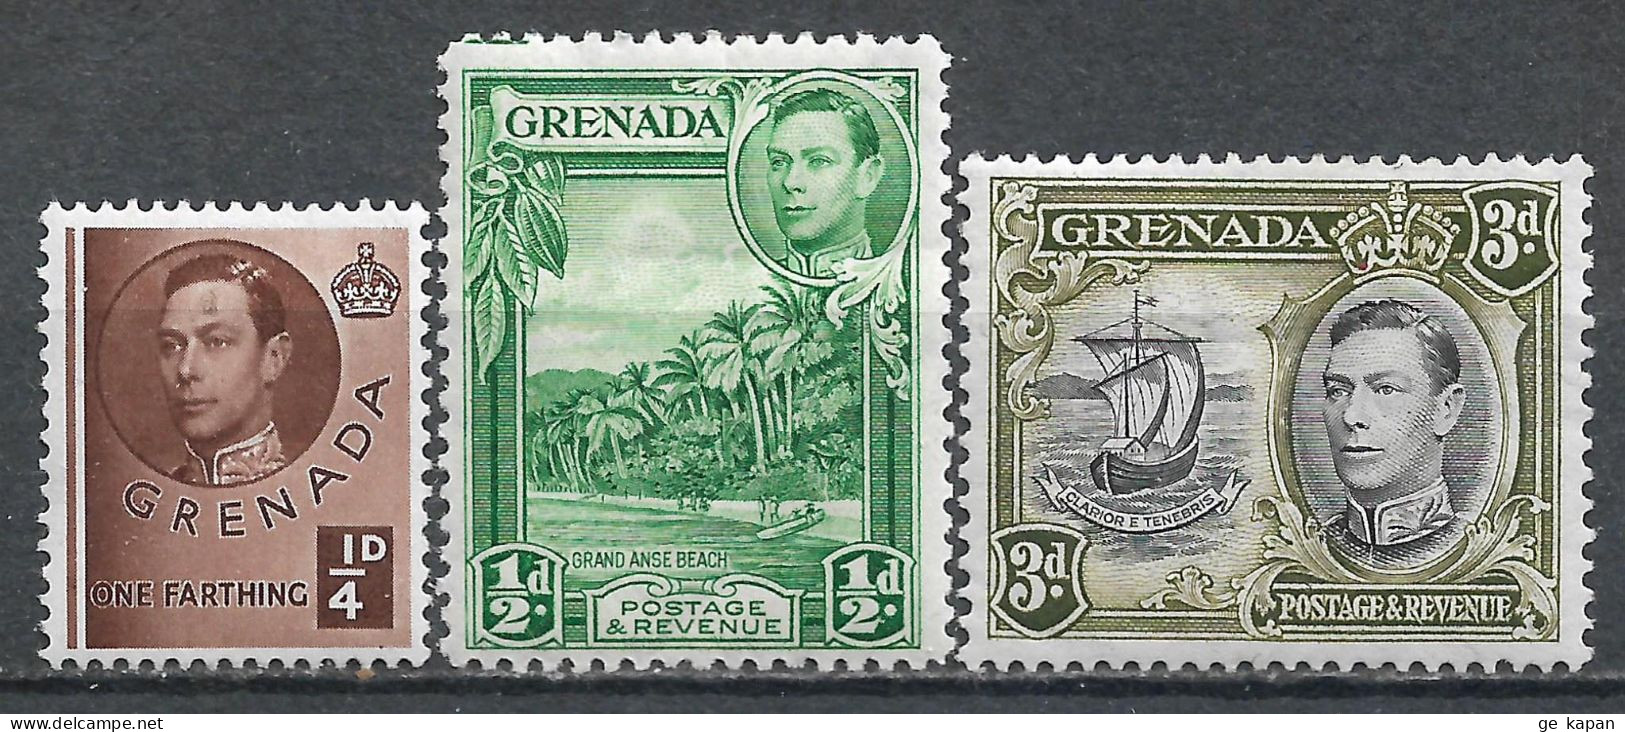 1942,1943 GRENADA Set Of 3 MLH STAMPS (Michel # 123b,124bA,129bA) CV €4.20 - Grenada (...-1974)